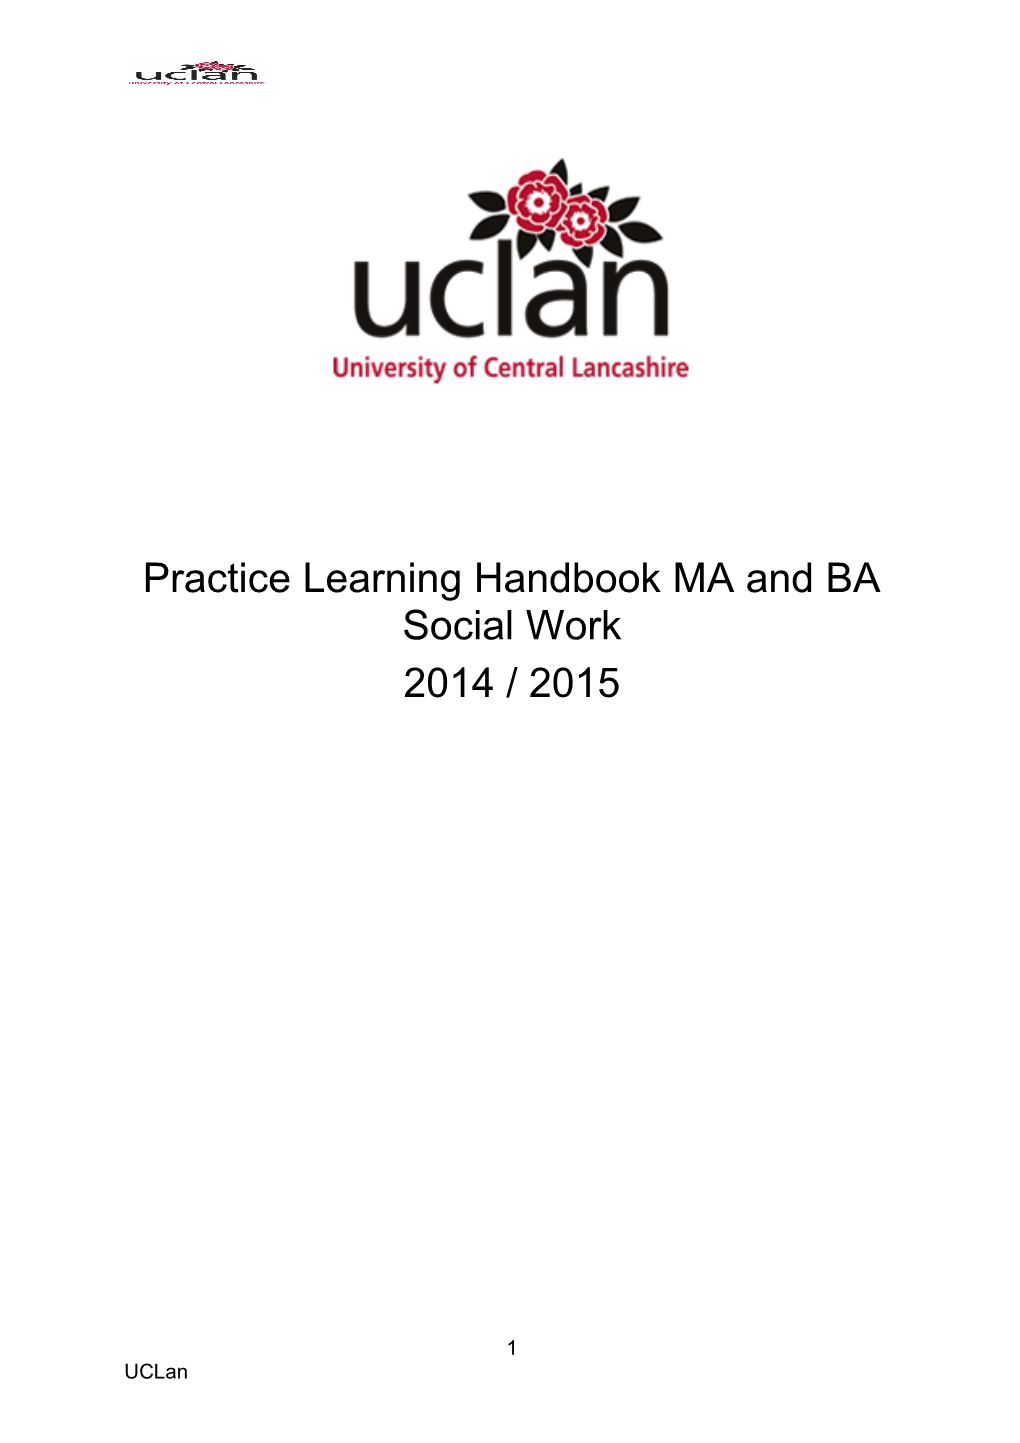 Practice Learning Handbook MA and BA Social Work